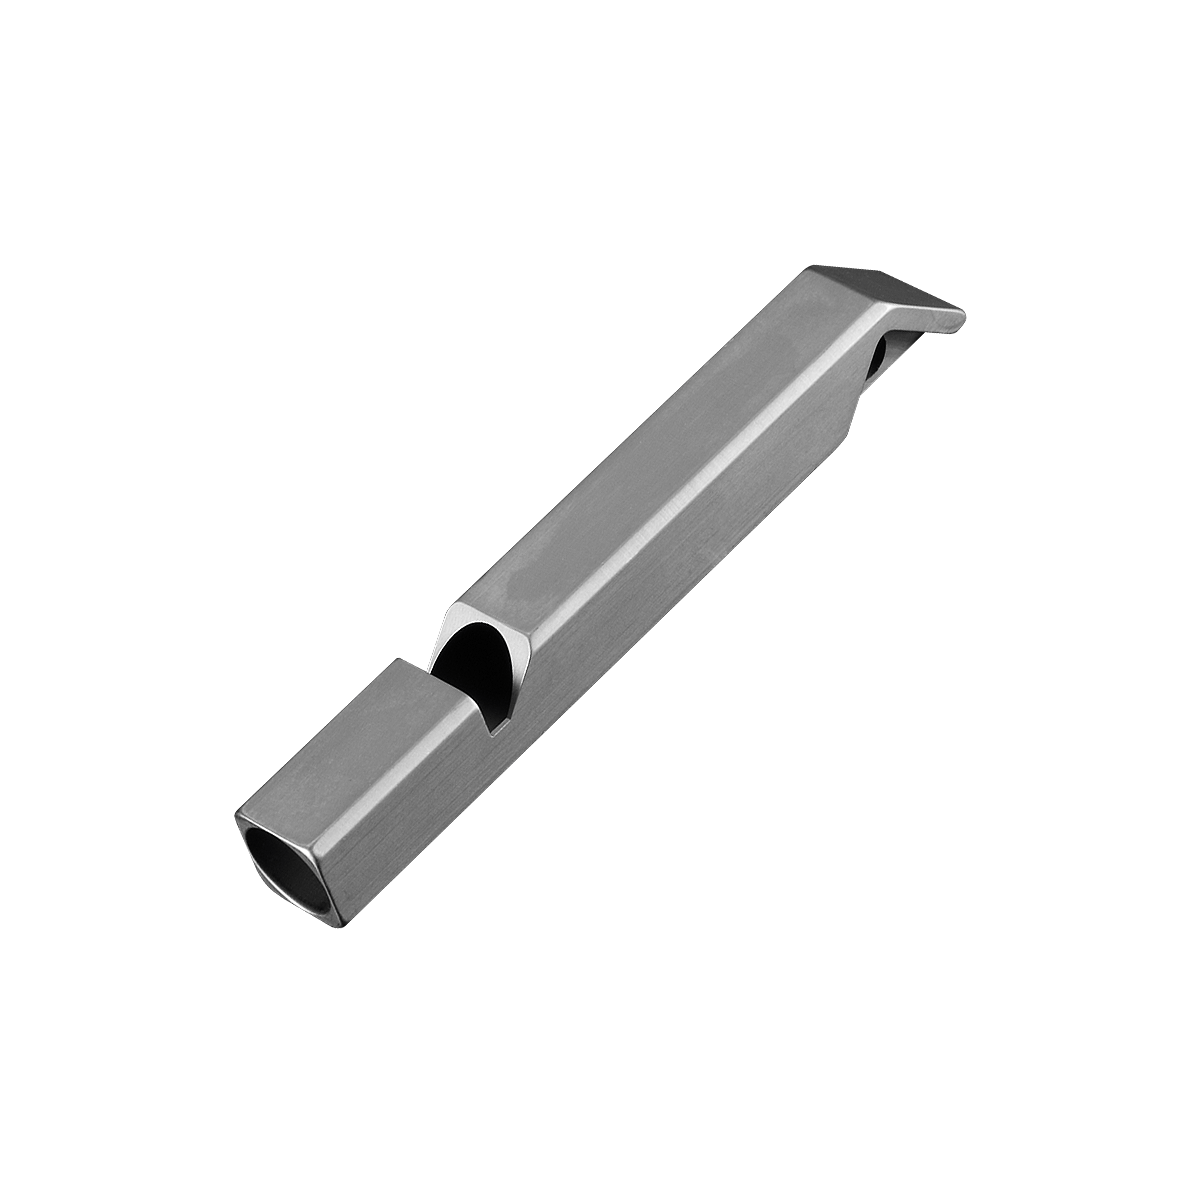 Titanium Whistle NWS10 - 120db